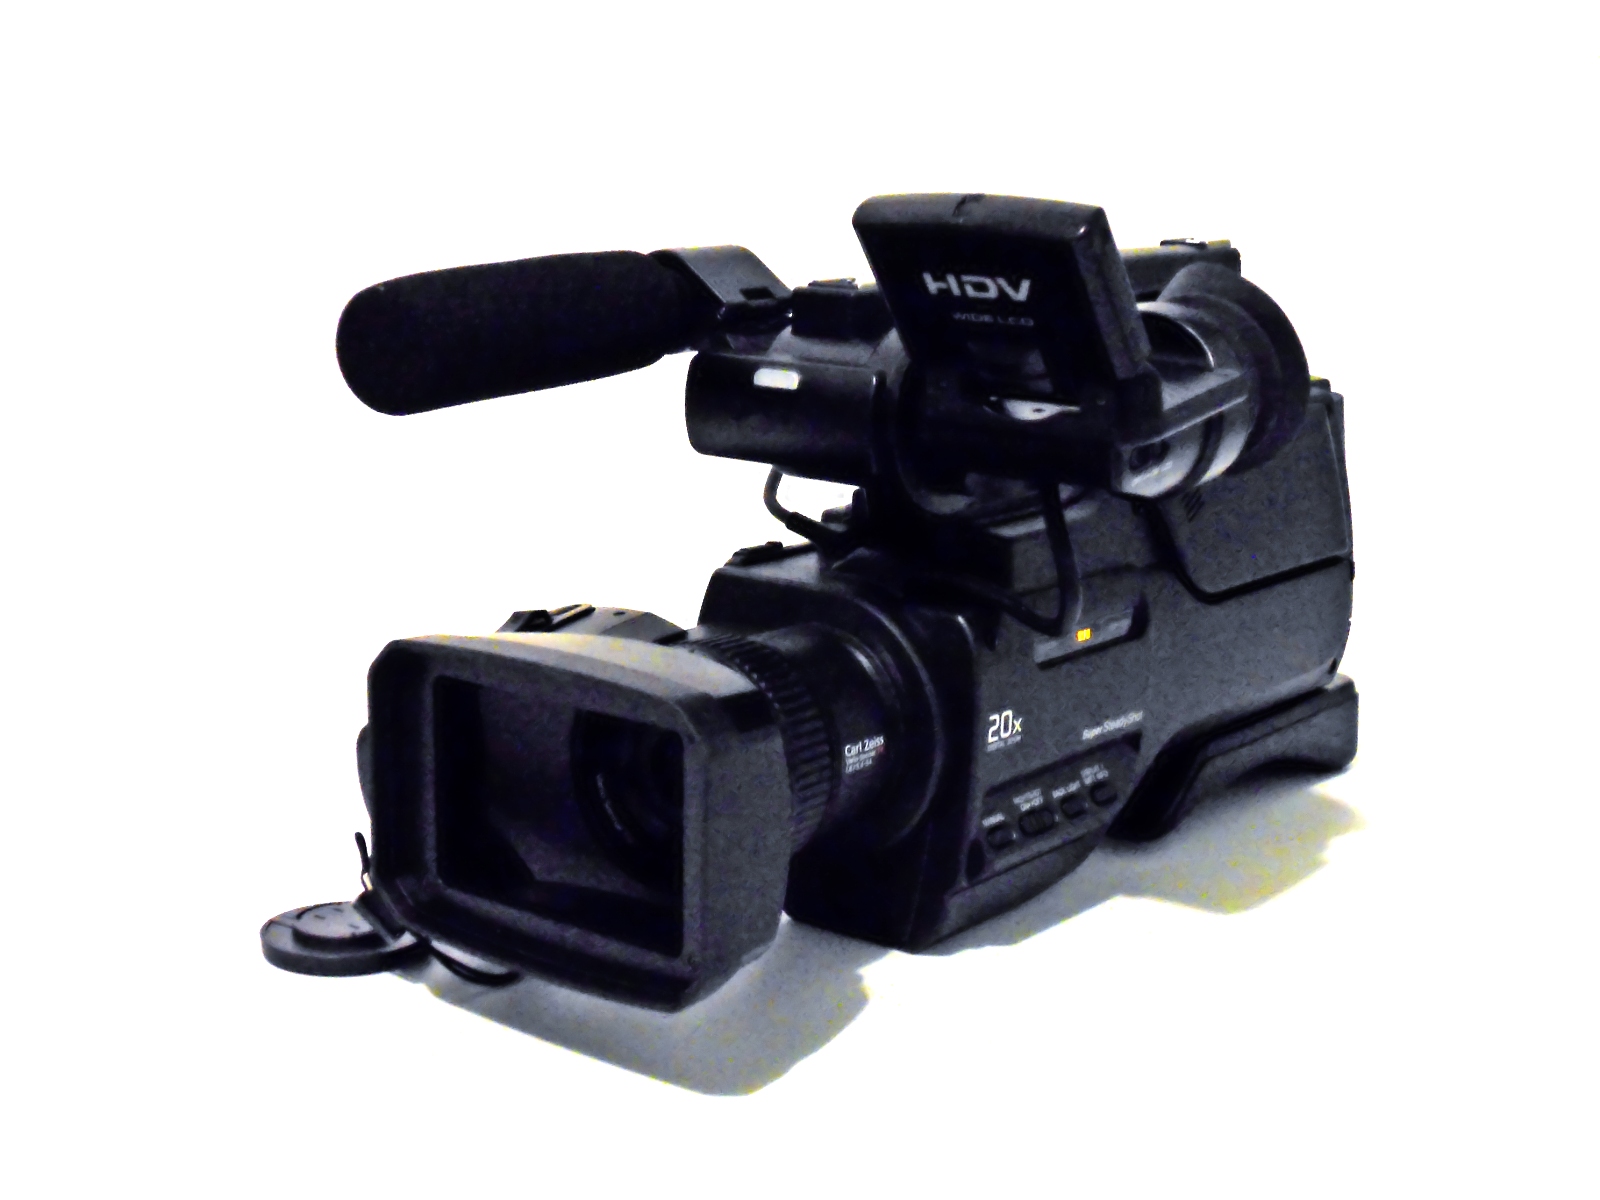 Digital video camera, Action, Production, Microphone, Minidv, HQ Photo